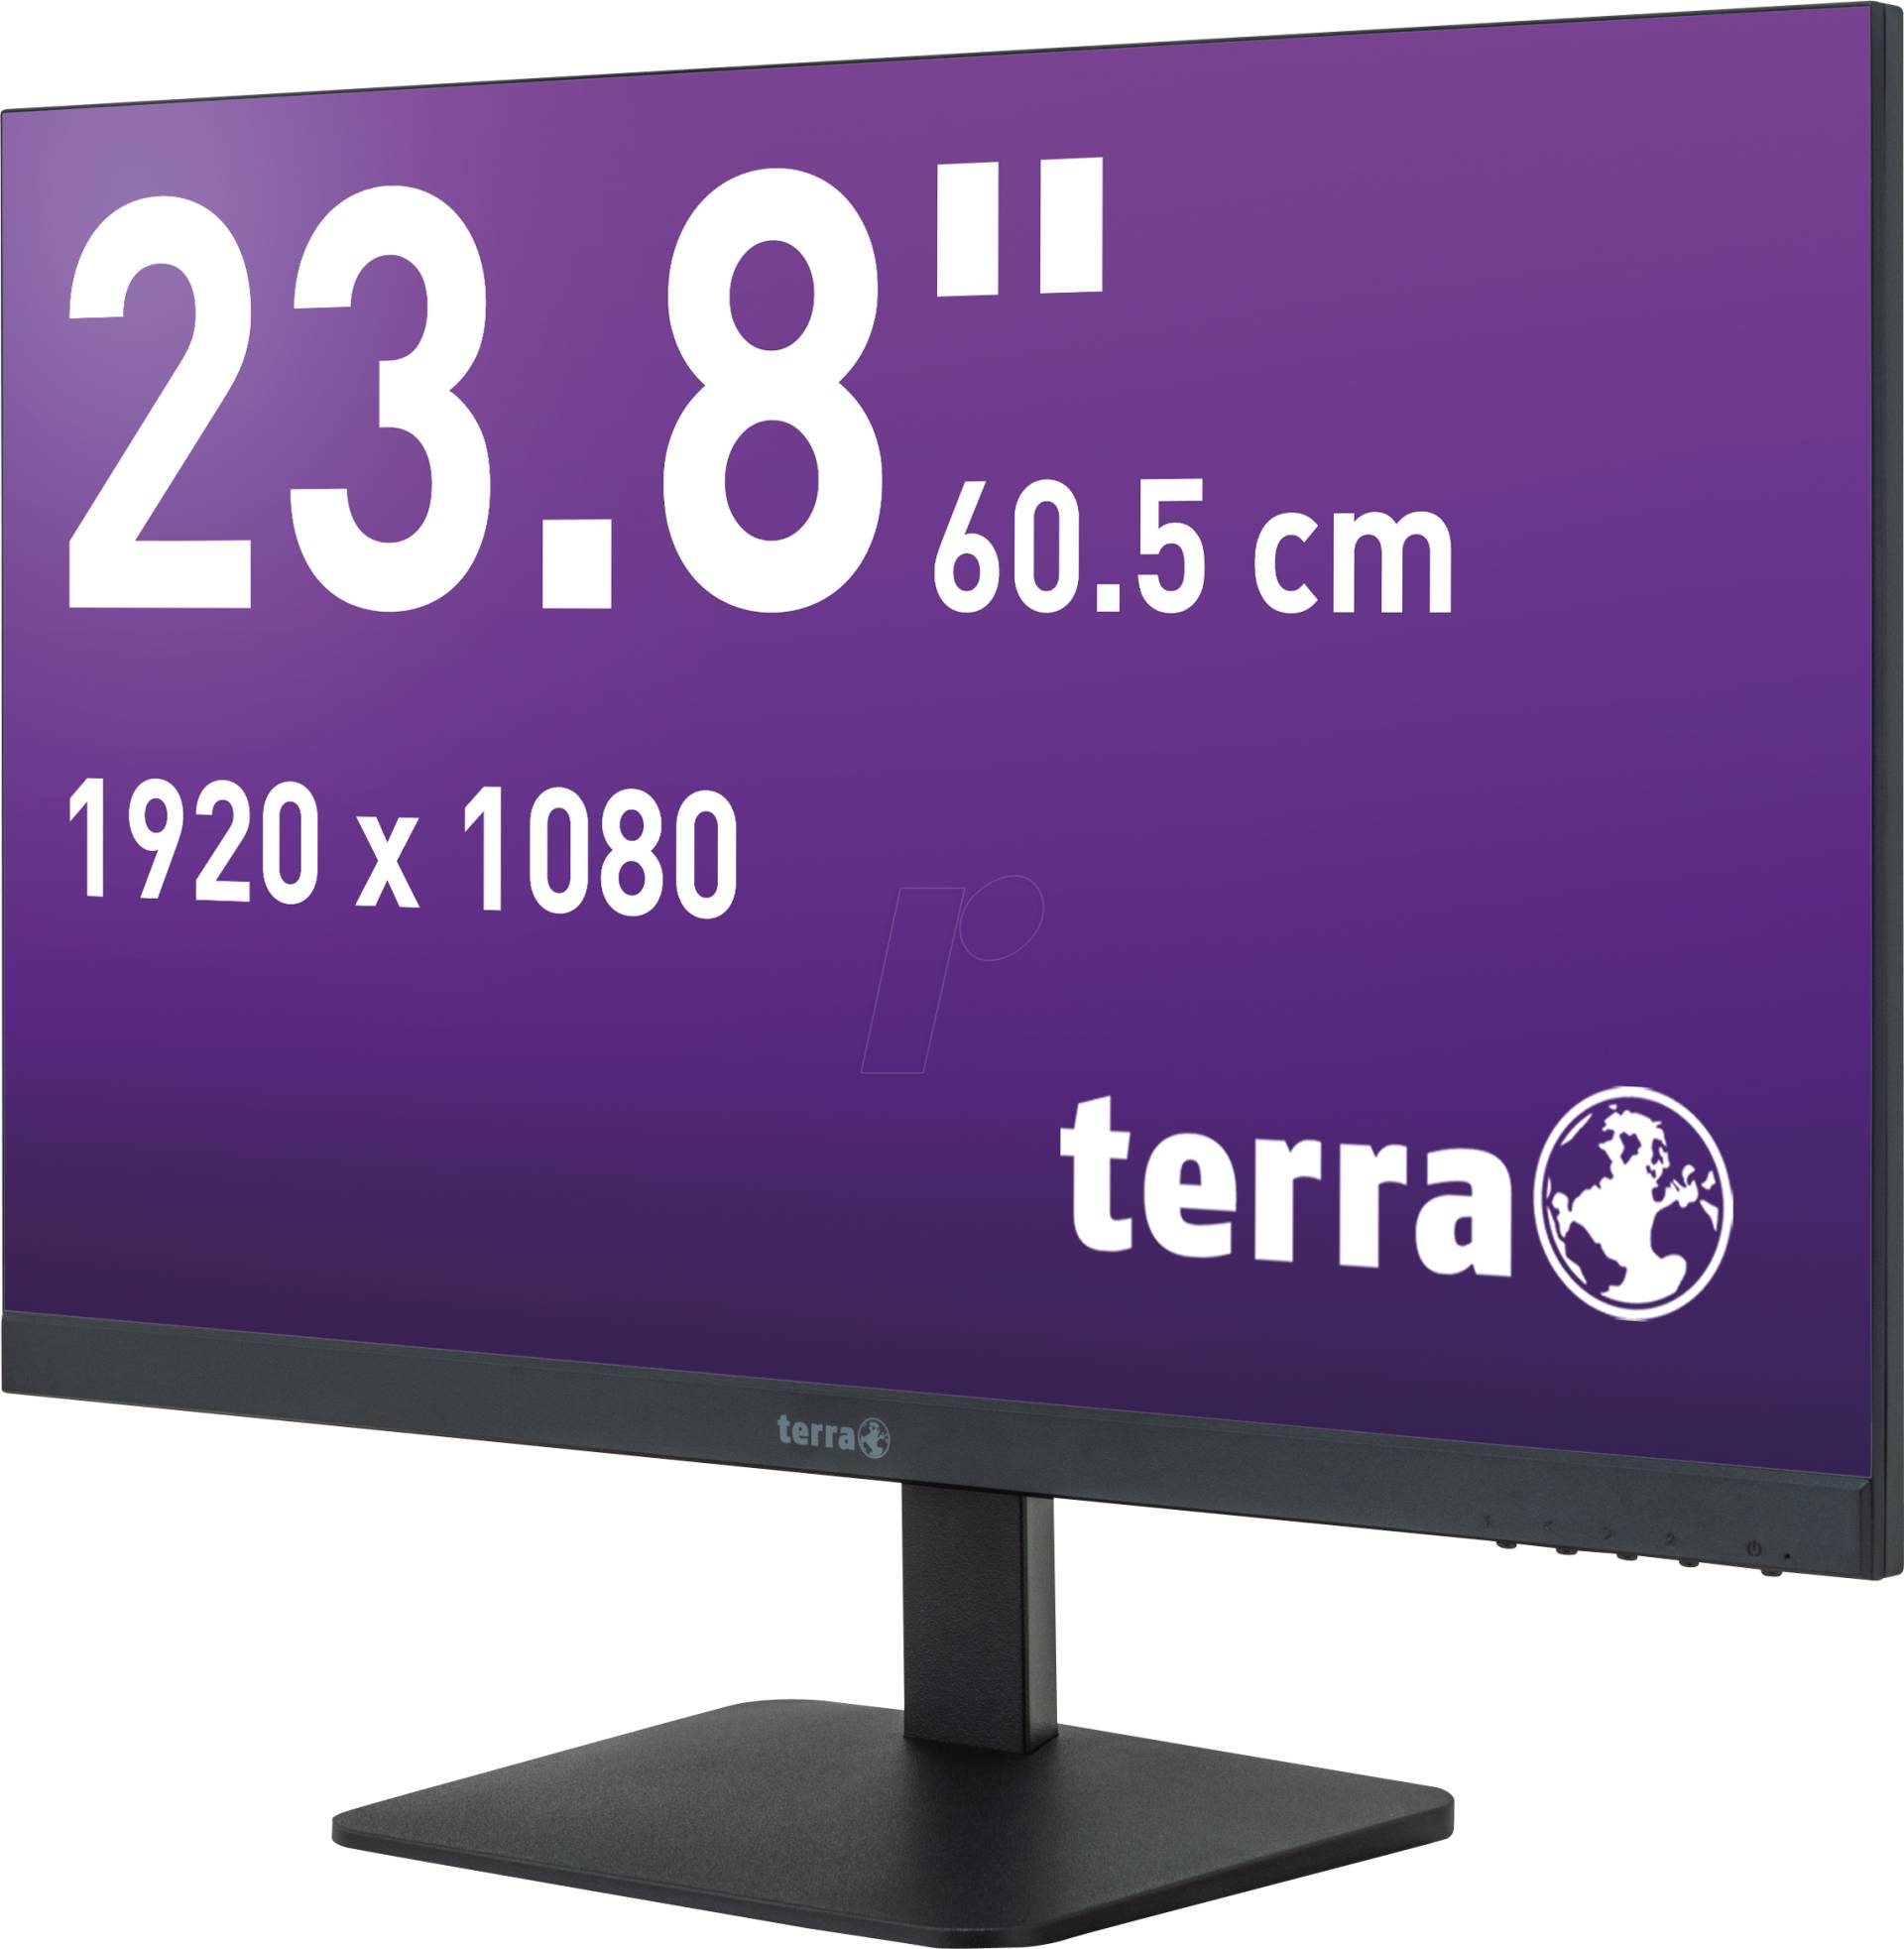 TERRA 3030220 - 61cm Monitor, 1080p, Lautsprecher, USB-C von TERRA